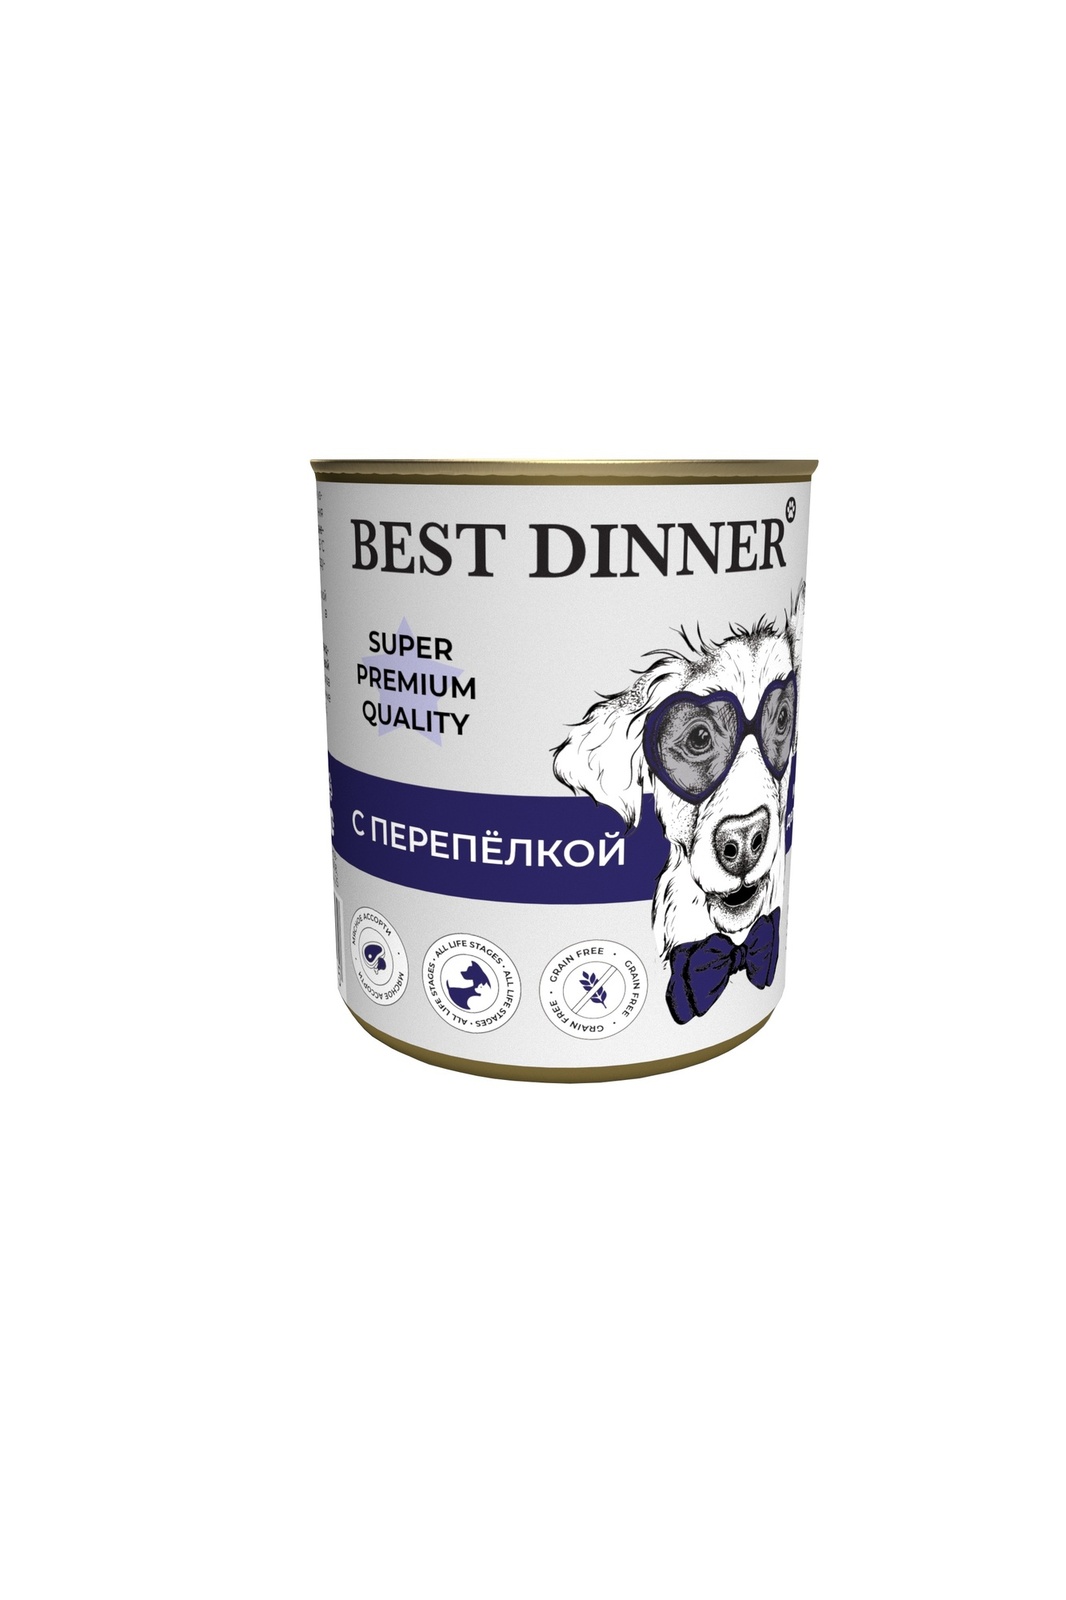 Best Dinner Best Dinner консервы для собак Super Premium С перепелкой (340 г) best dinner best dinner консервы для собак super premium с перепелкой 340 г